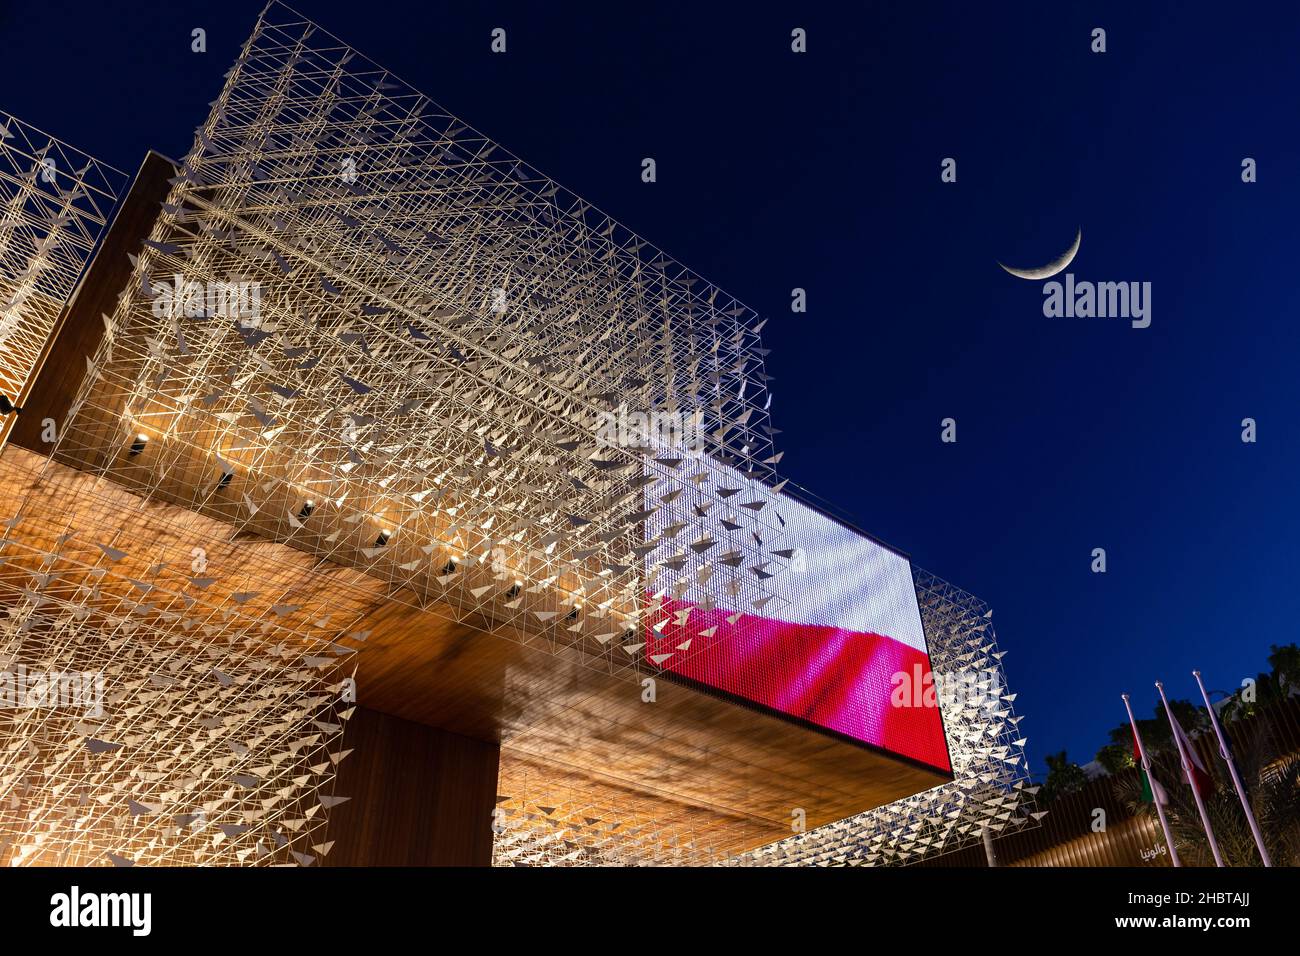 Dubai, UAE, 09.12.2021. Illuminated Poland Pavilion at Expo 2020 Dubai, wooden facade covered in sculptures of flying birds, dark night sky with cresc Stock Photo